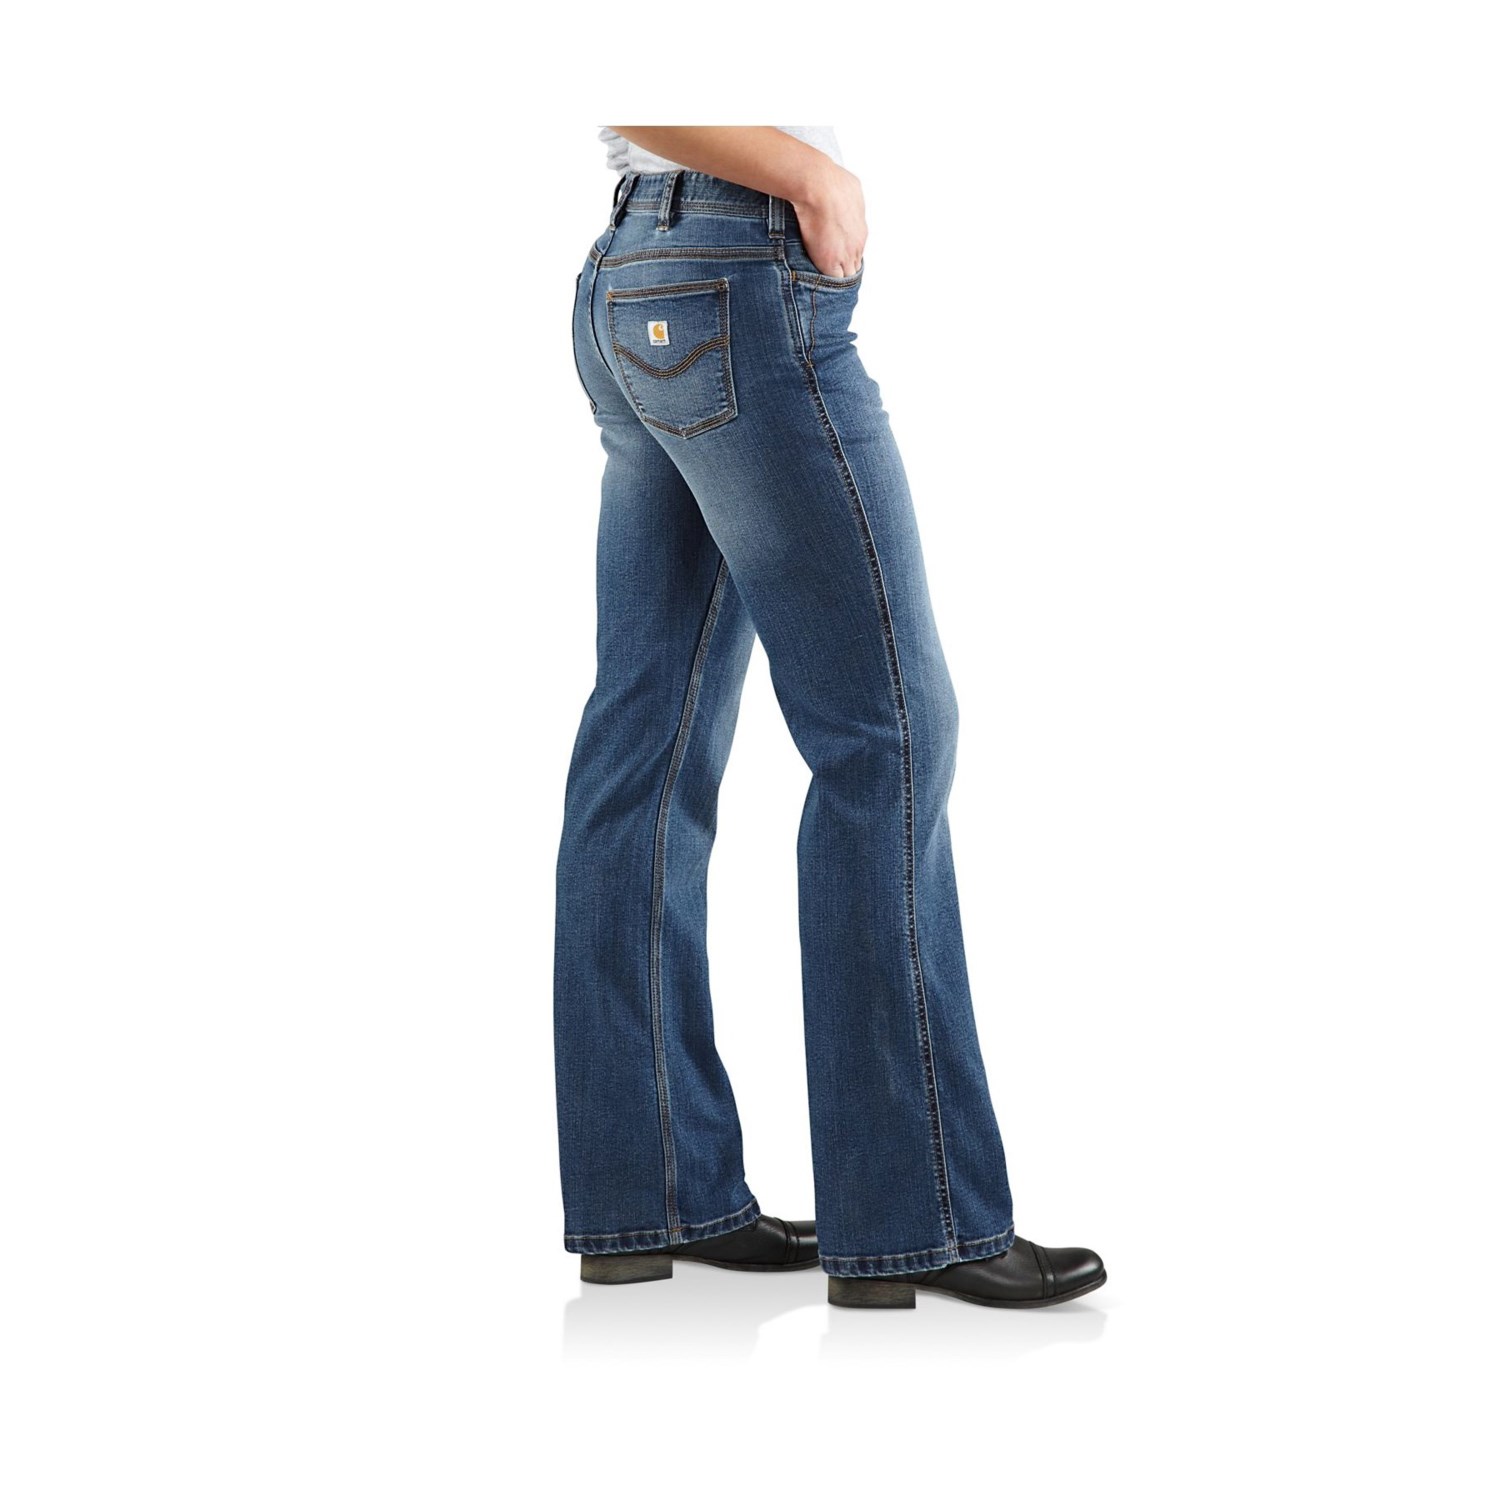 Carhartt Original Fit Jasper Jeans (For Women)